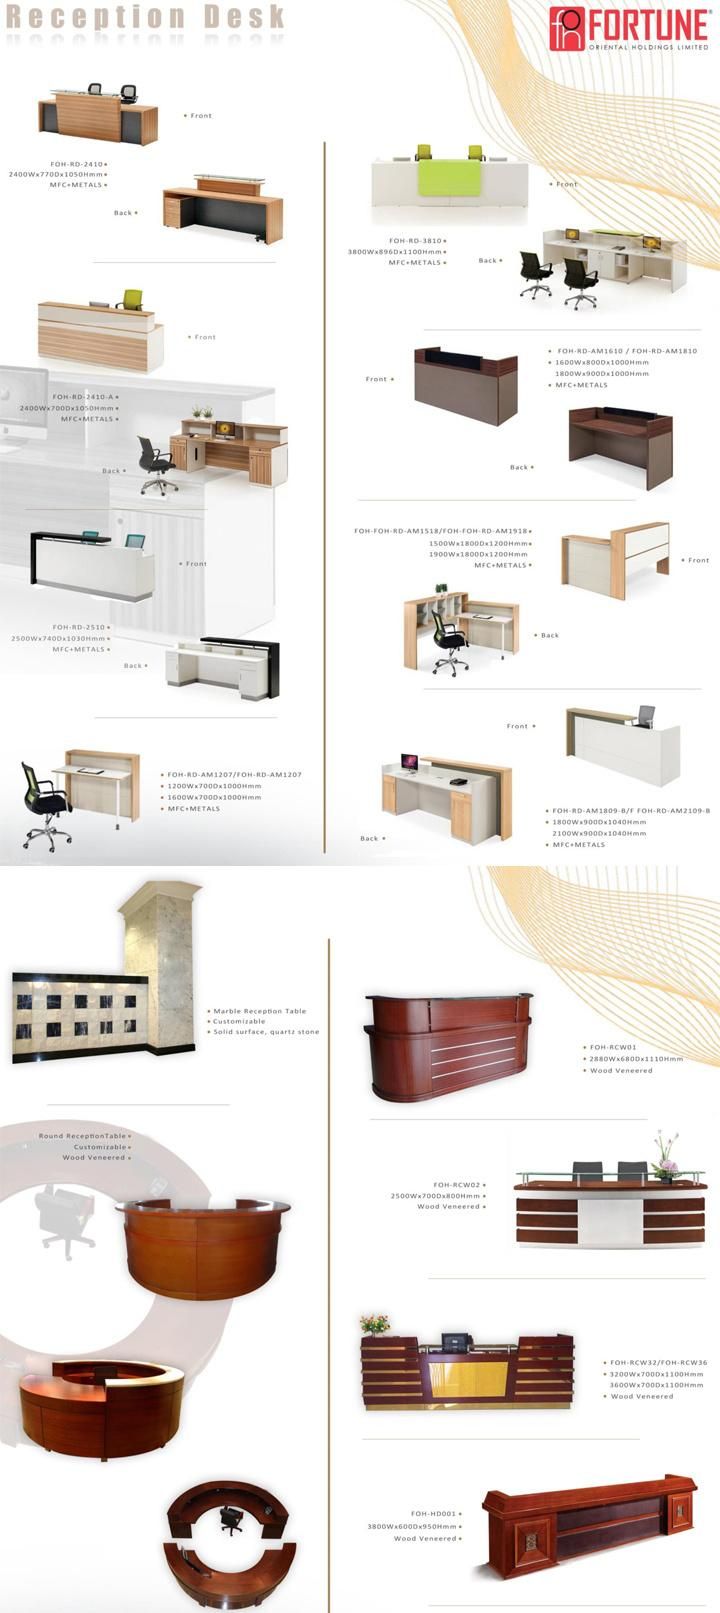 Company Furniture Office Furniture Reception Desks for Sale Foh-Rd-3810 (2)